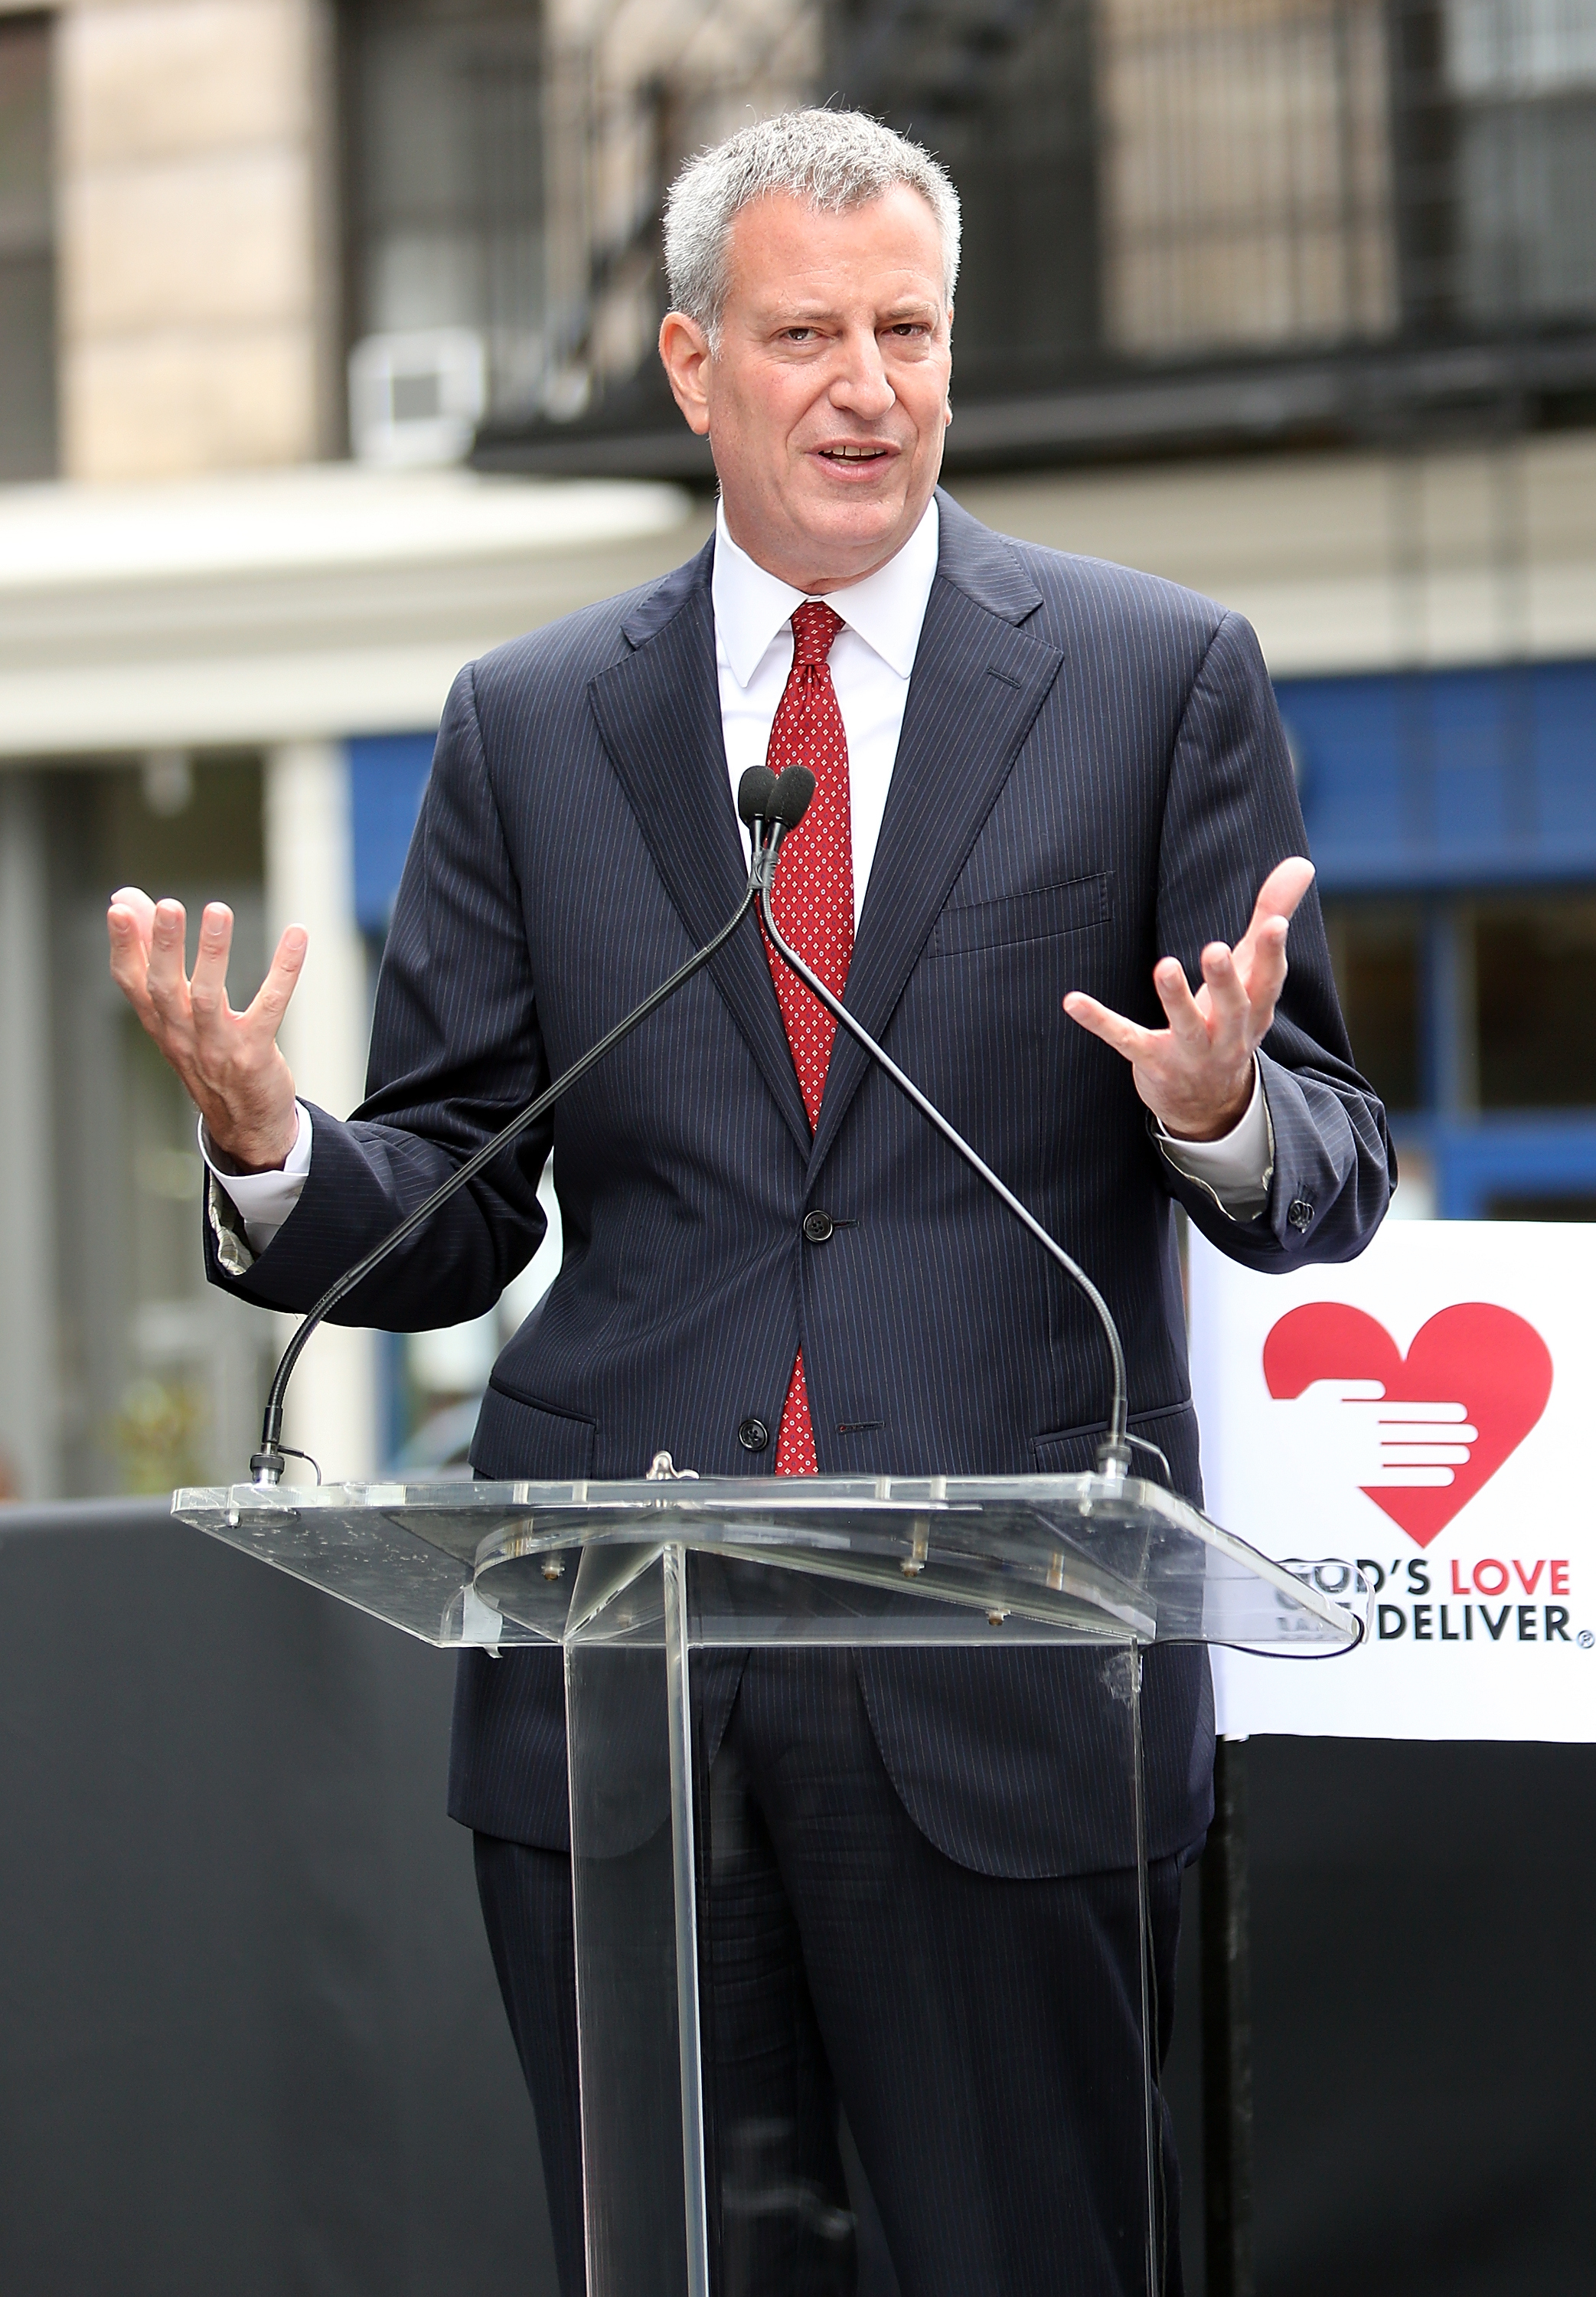 New York City Mayor Bill de Blasio speaks at the "God's Love We Deliver" Building Dedication at God's Love We Deliver on June 9, 2015 in New York City. (Monica Schipper—Getty Images)